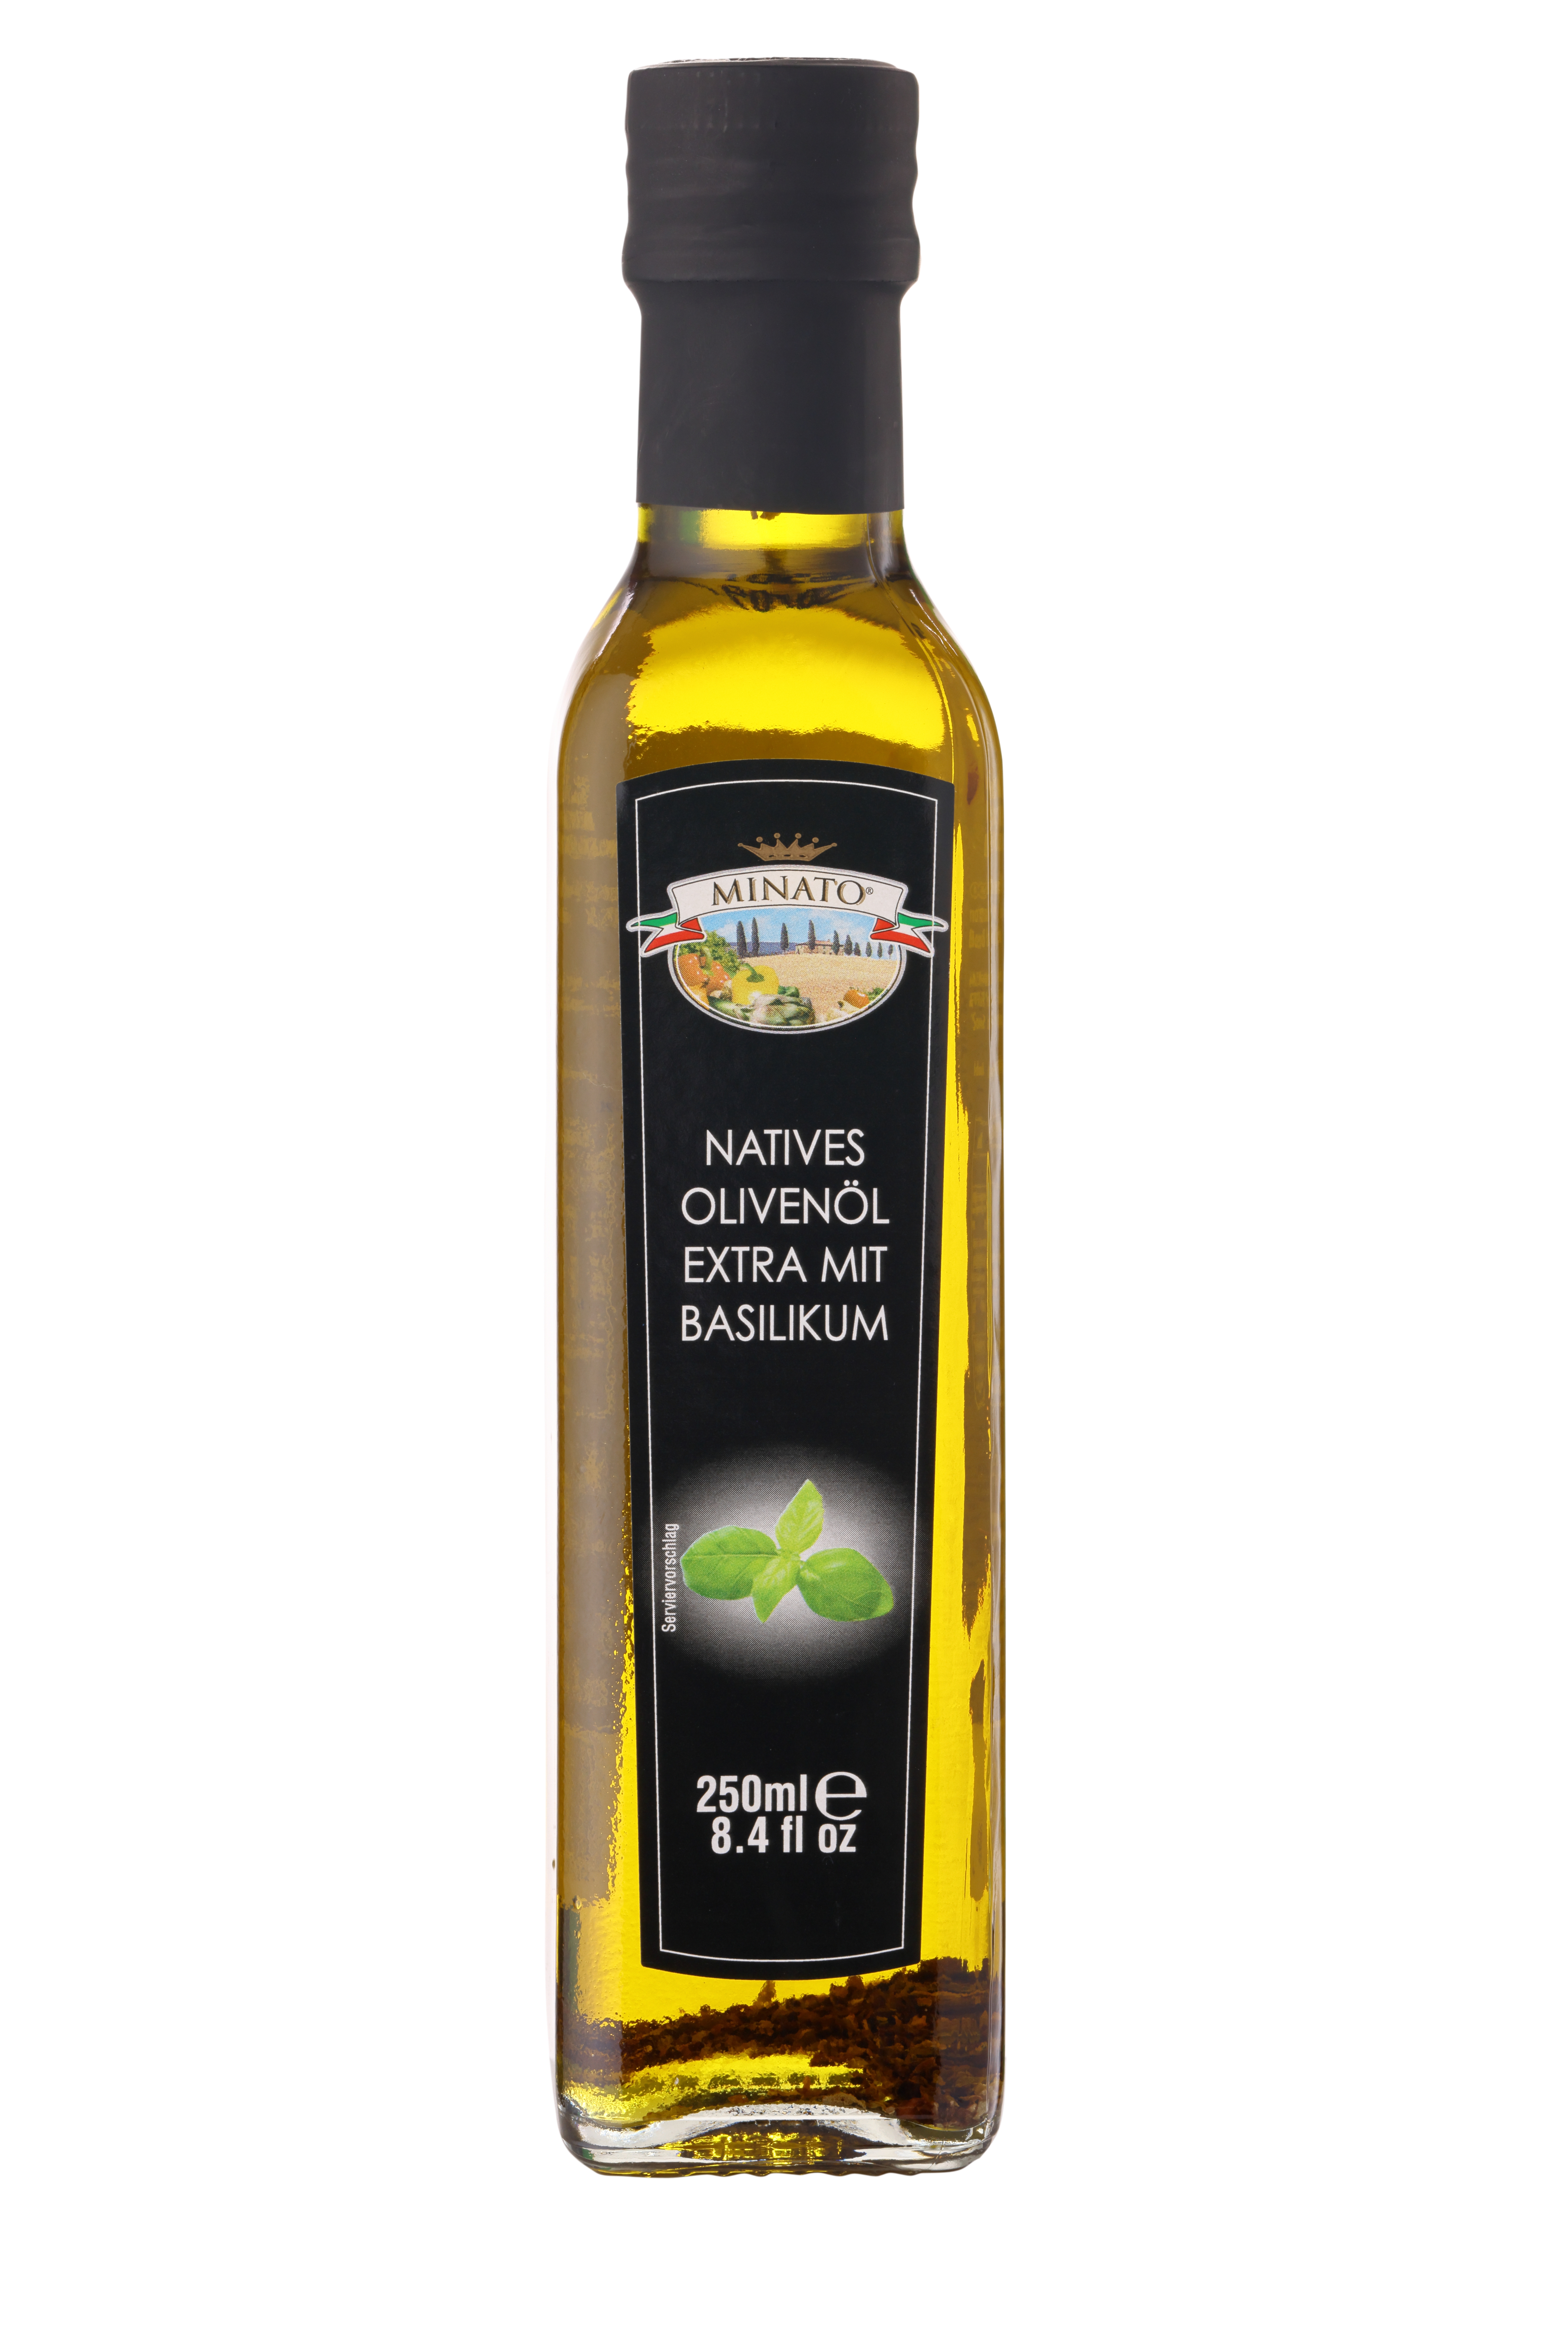 Minato, Natives Olivenöl Extra mit Basilikum